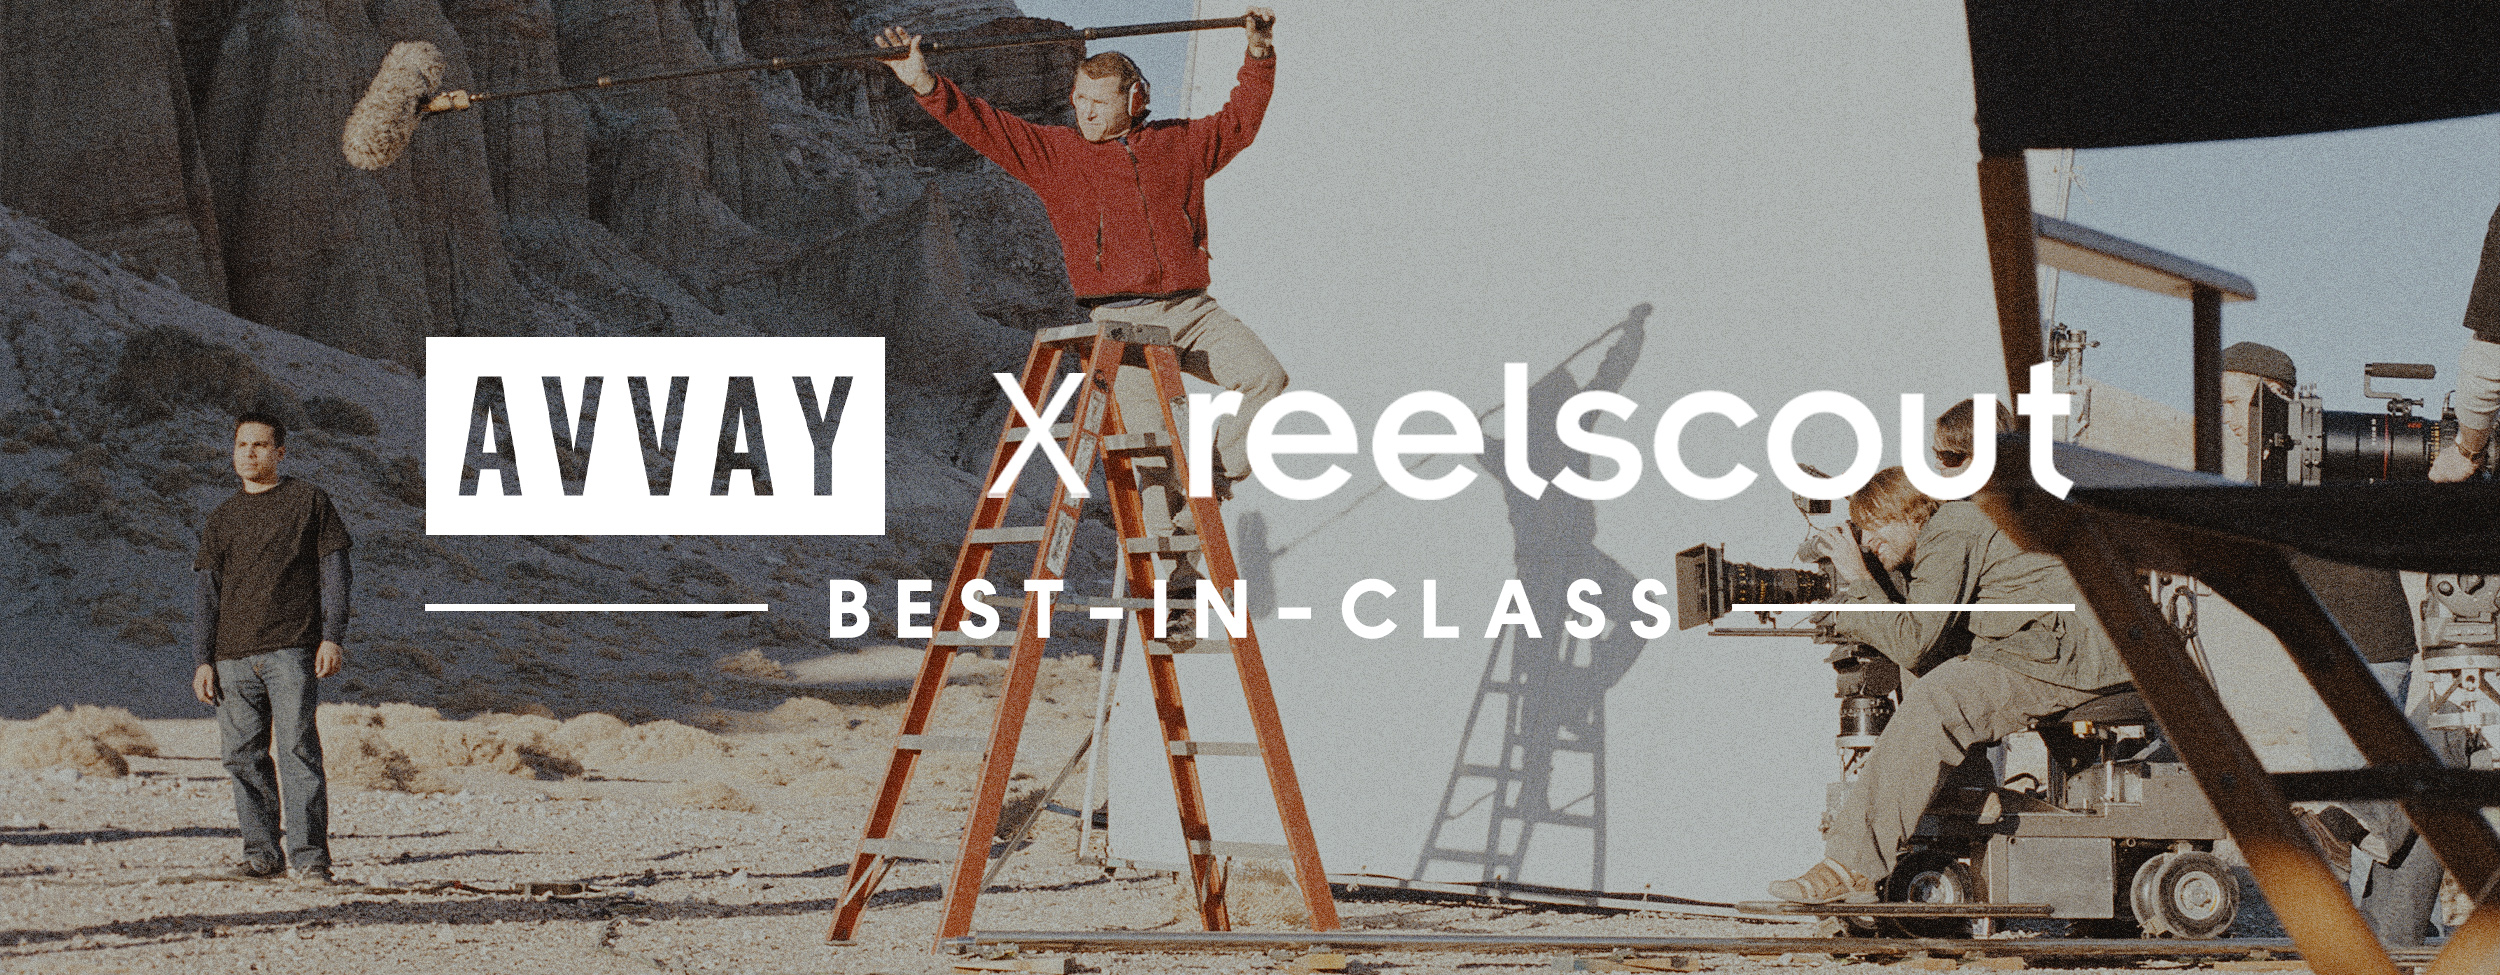 Best Photographers in Chicago: AVVAY X Reel-Scout Best In Class